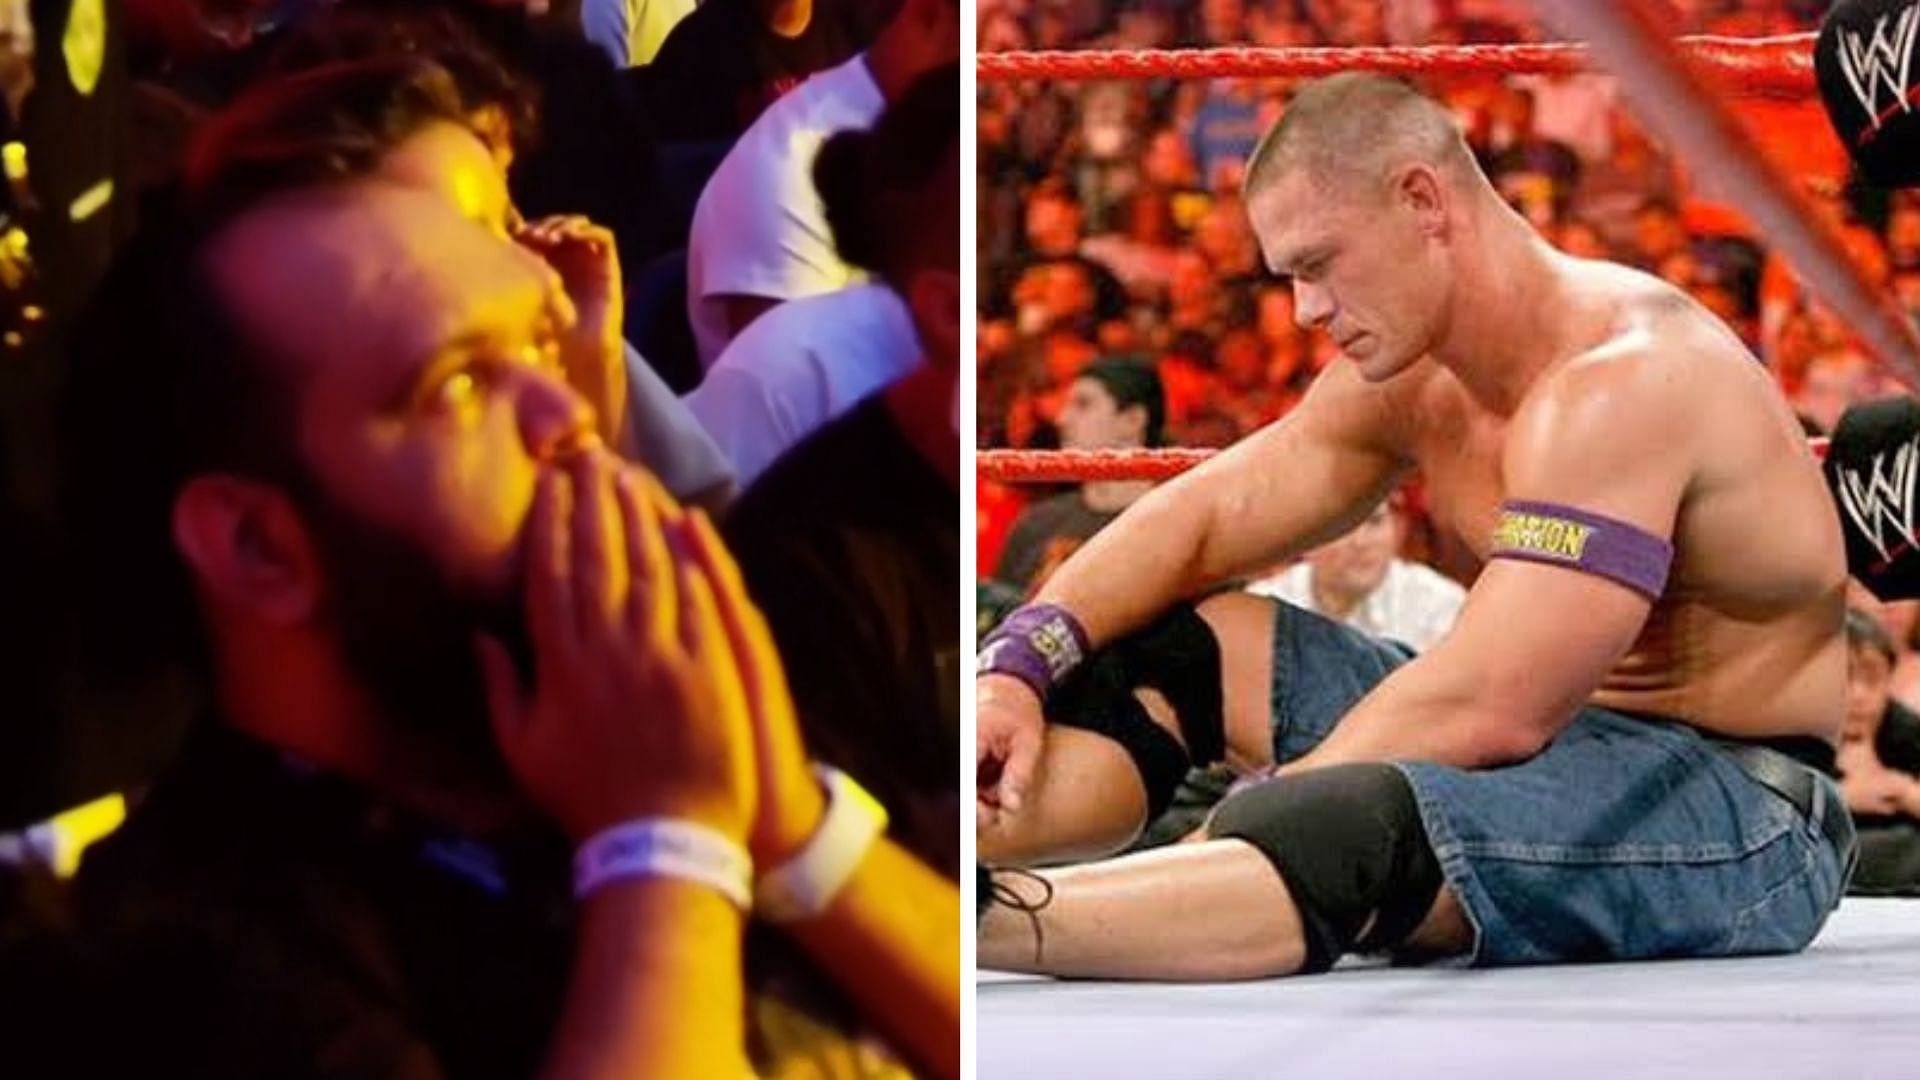 John Cena is a former WWE Champion